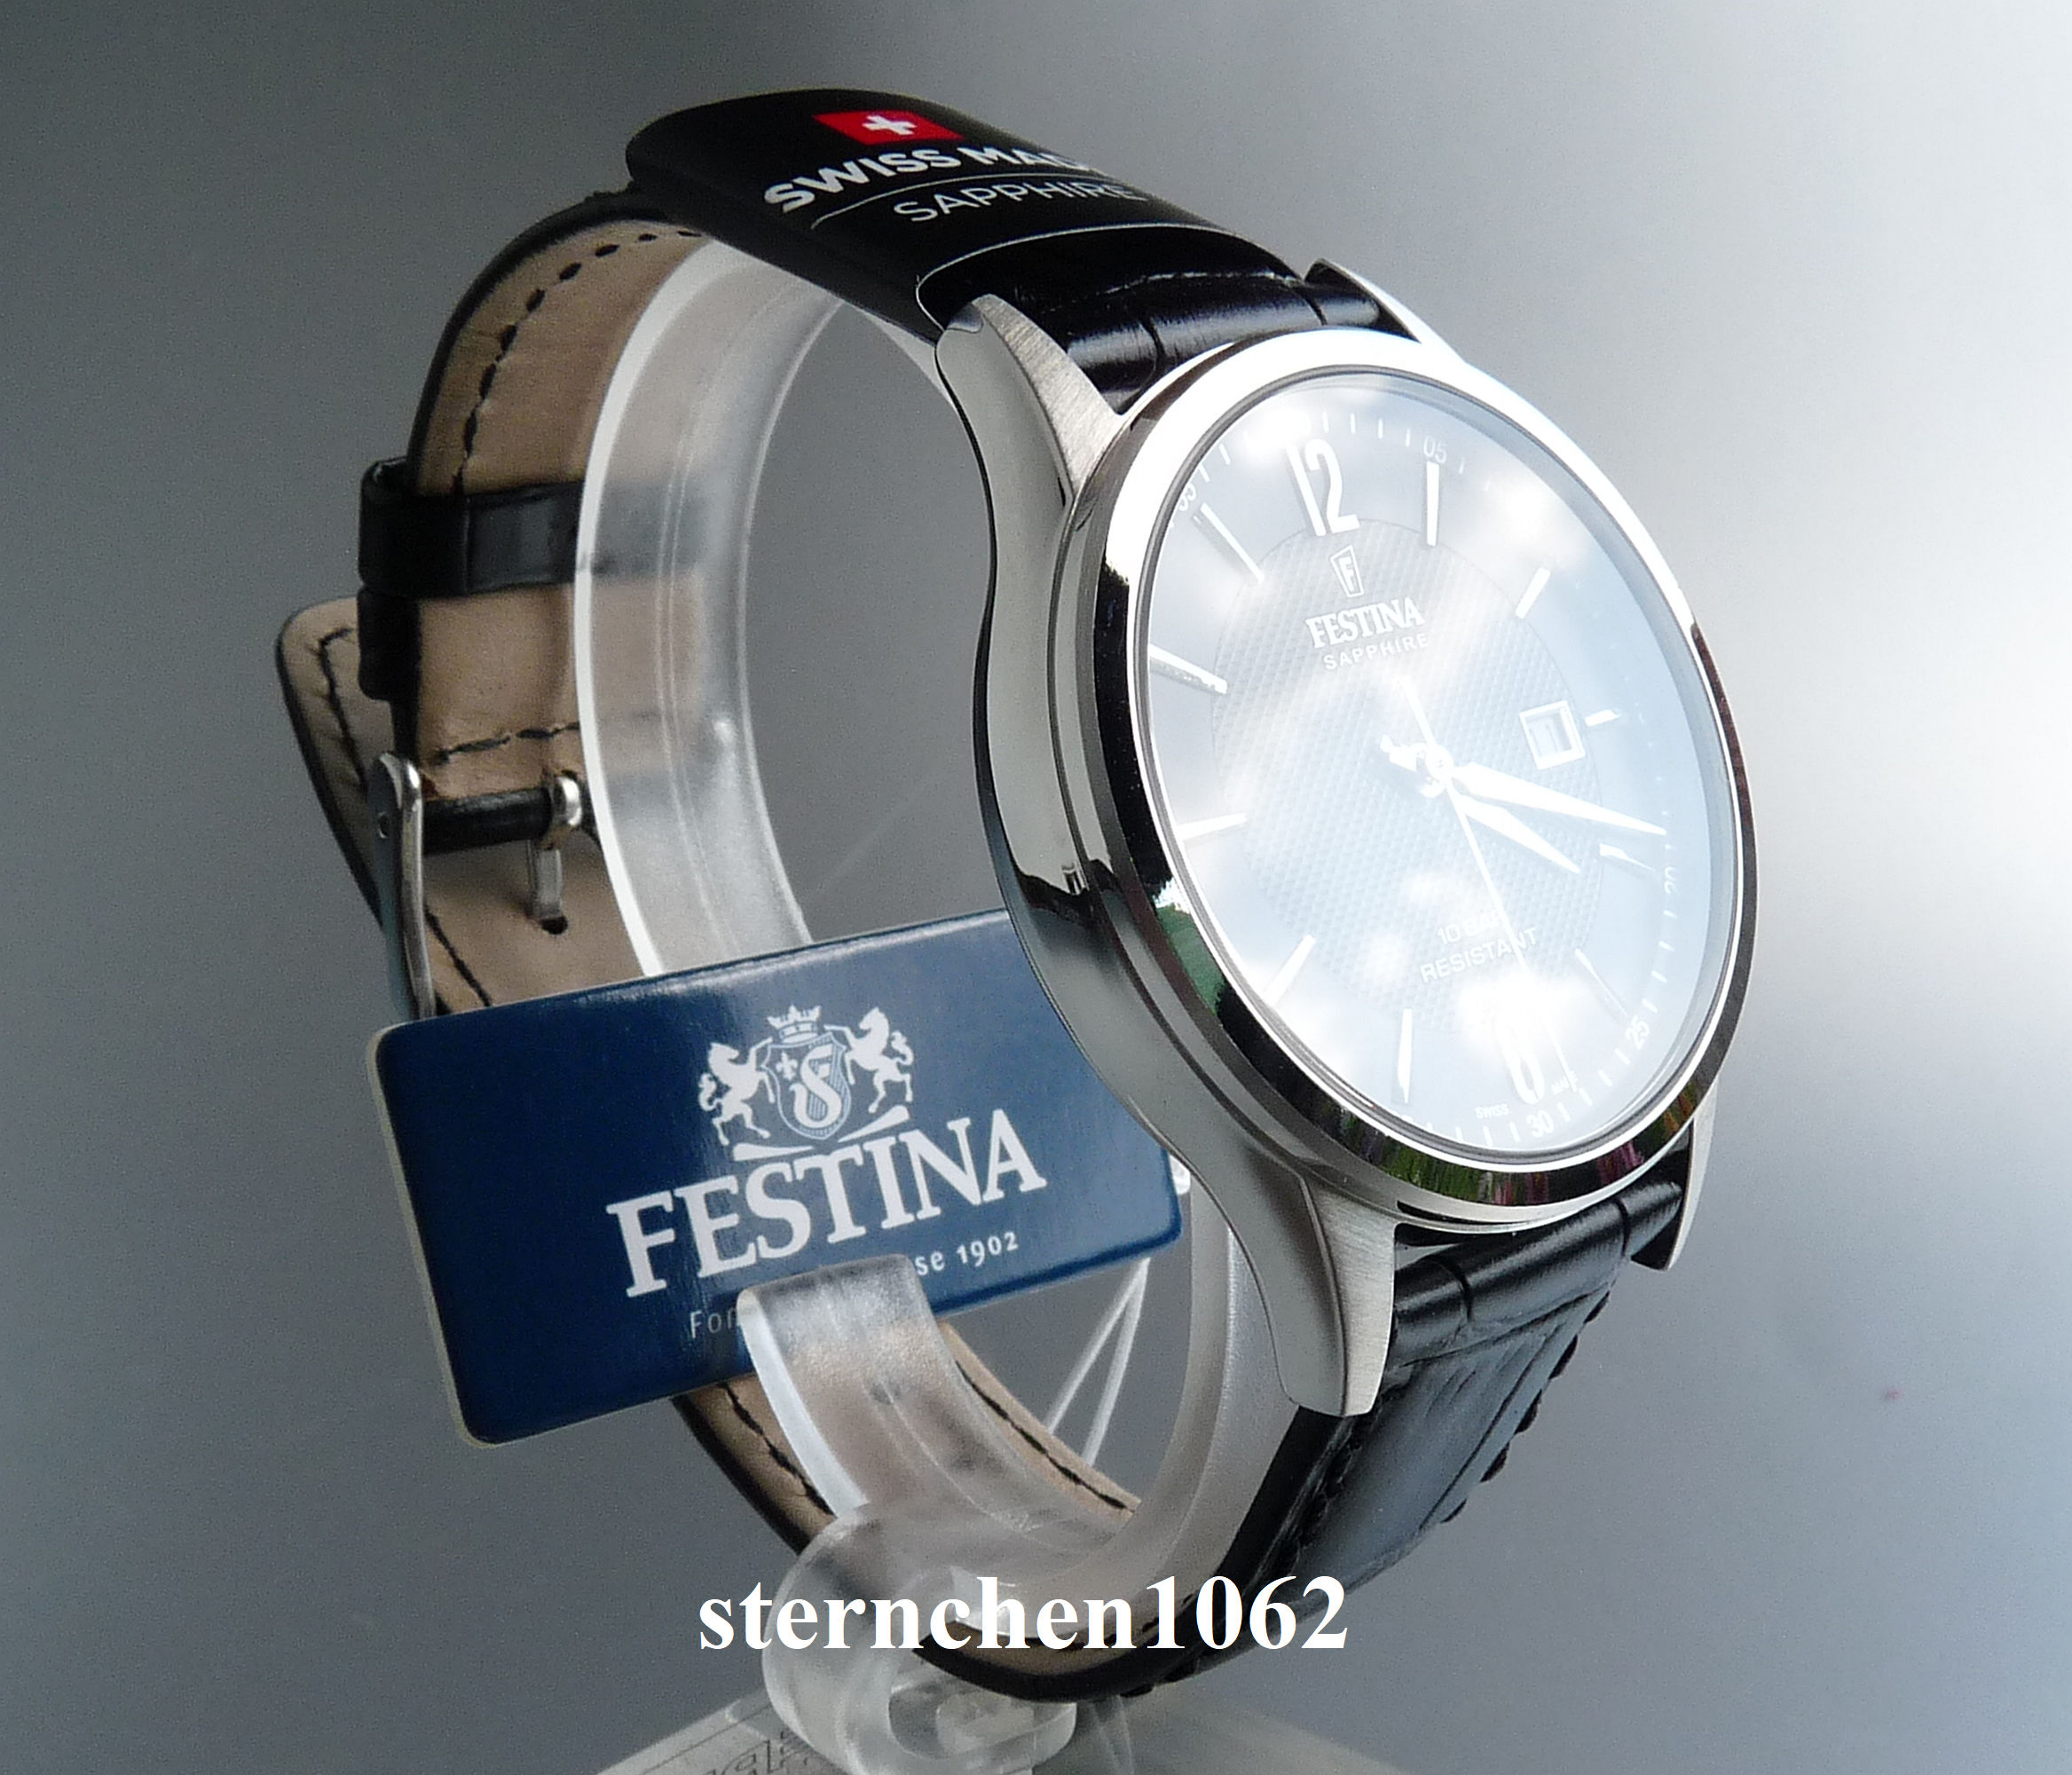 Sternchen 1062 F20007/4 - * Festina * Made * Swiss